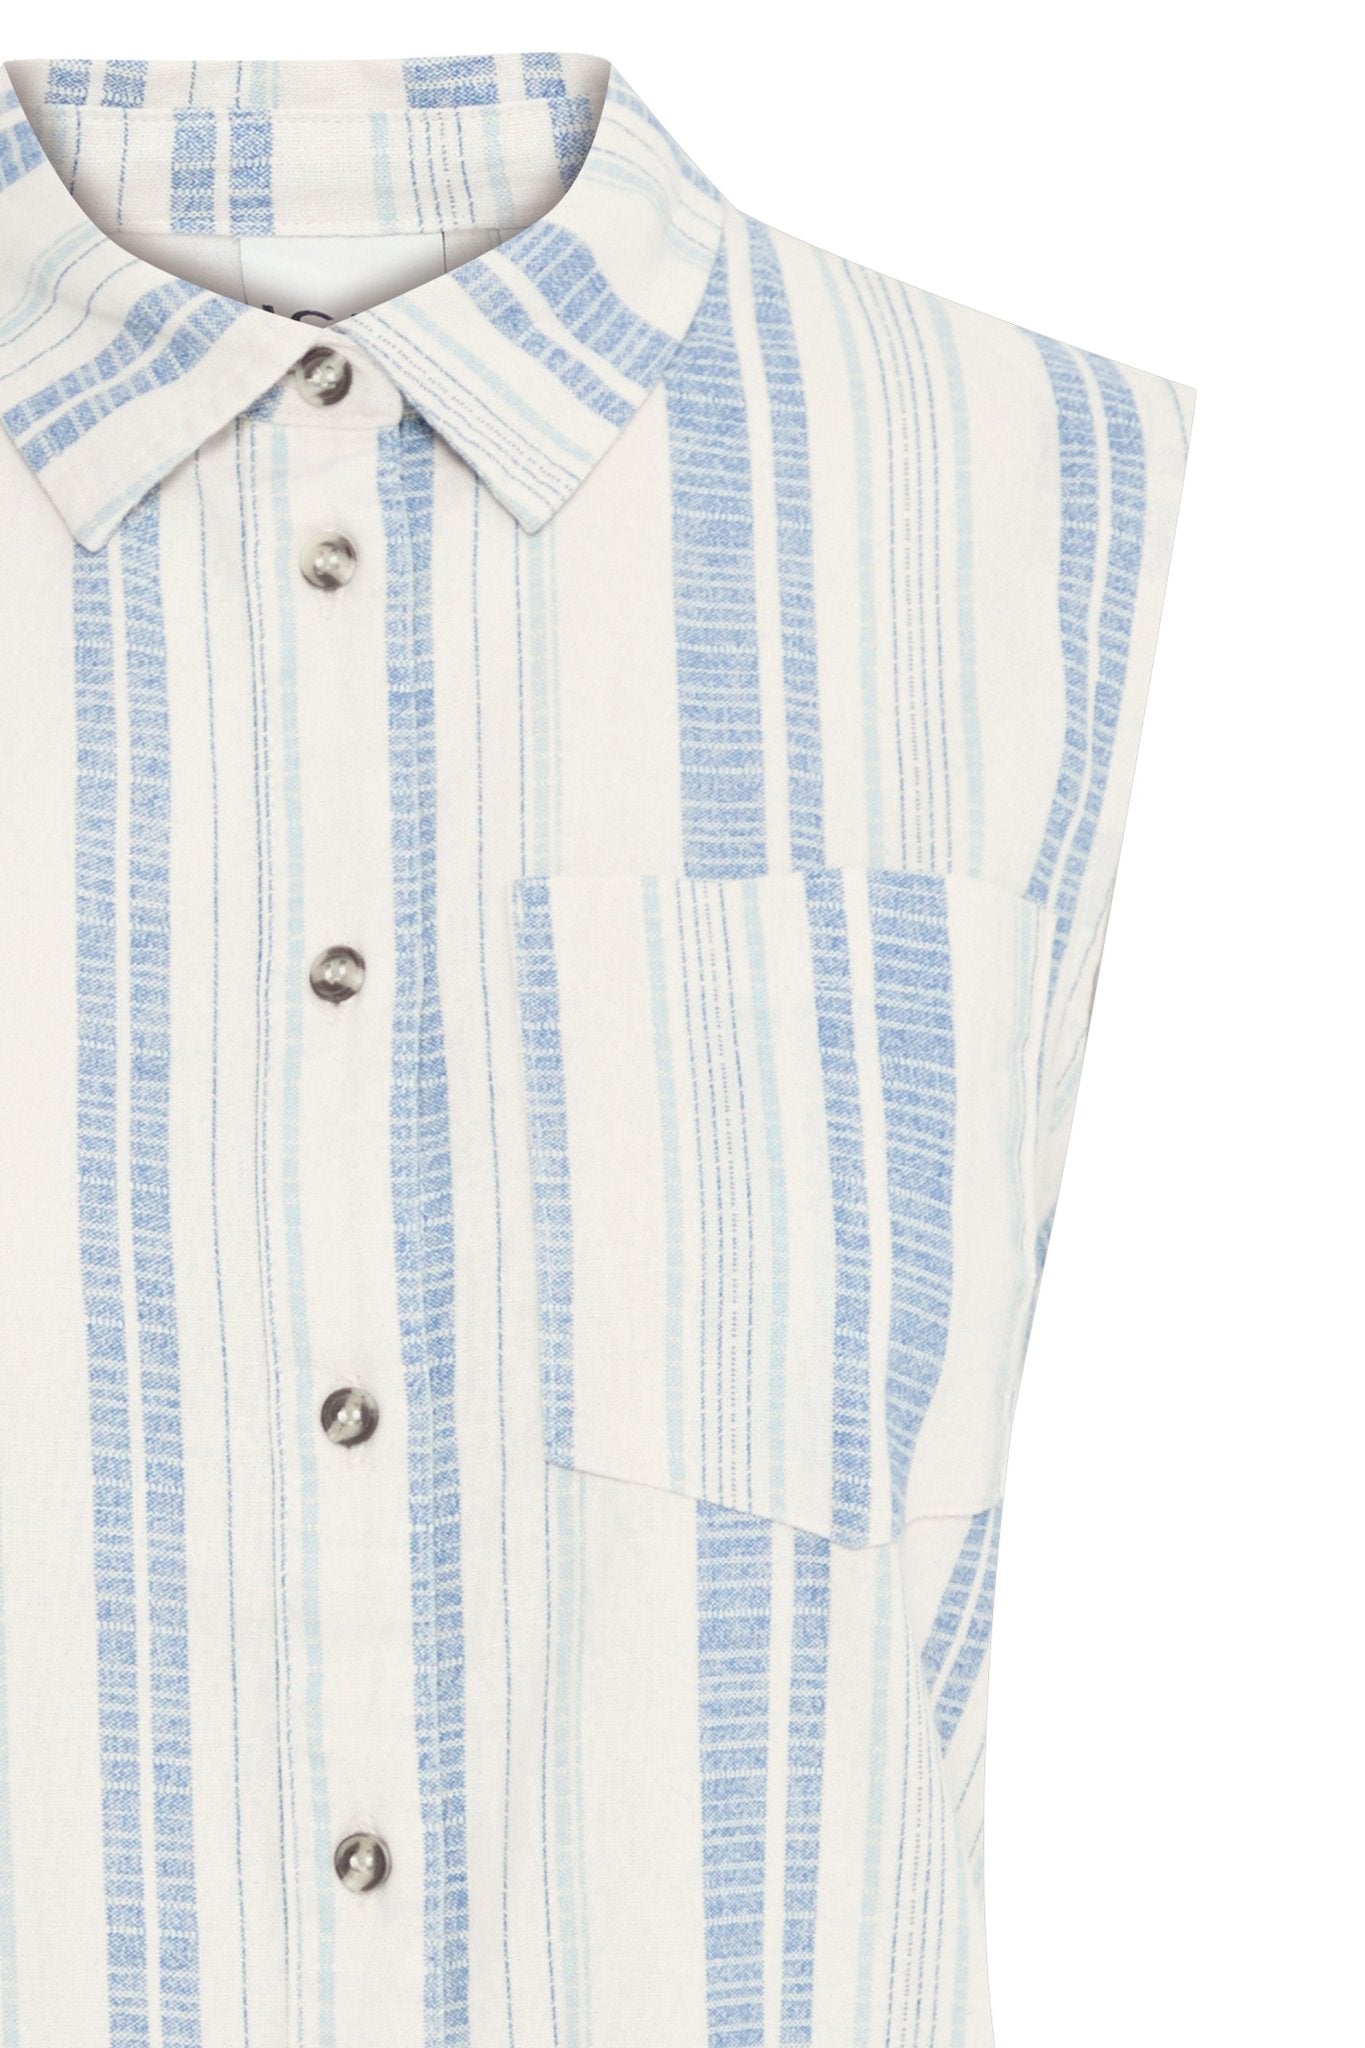 Lino sleeveless striped shirt by Ichi - cashmere blue - Blue Sky Fashions & Lingerie